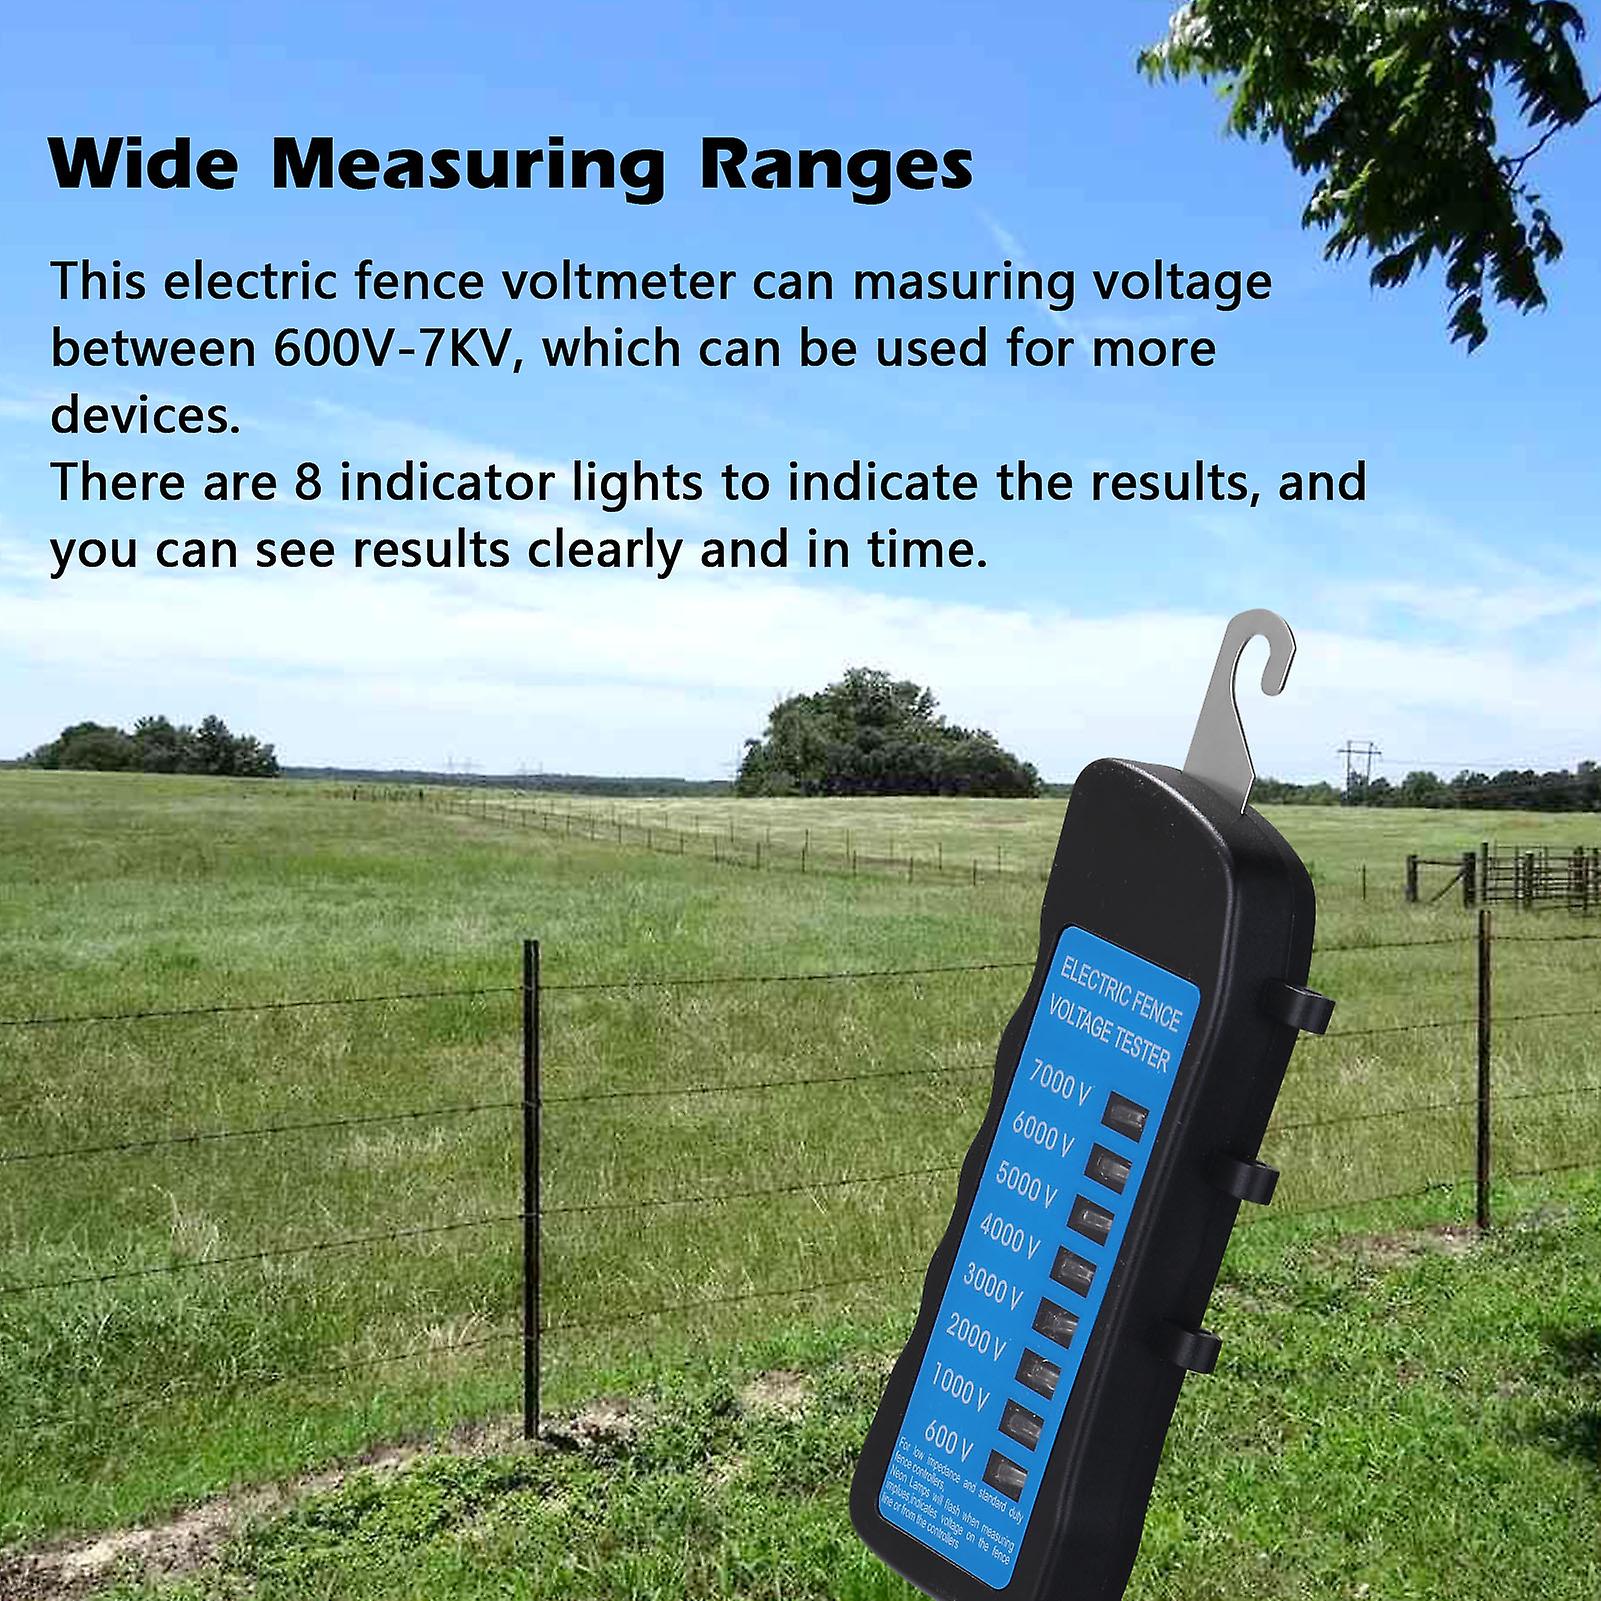 Mld-002 600v-7kv Fence Tester Home Garden Horse Livestock Electric Fence Voltmeter No Need Battery With 8 Indicator Light No.326433